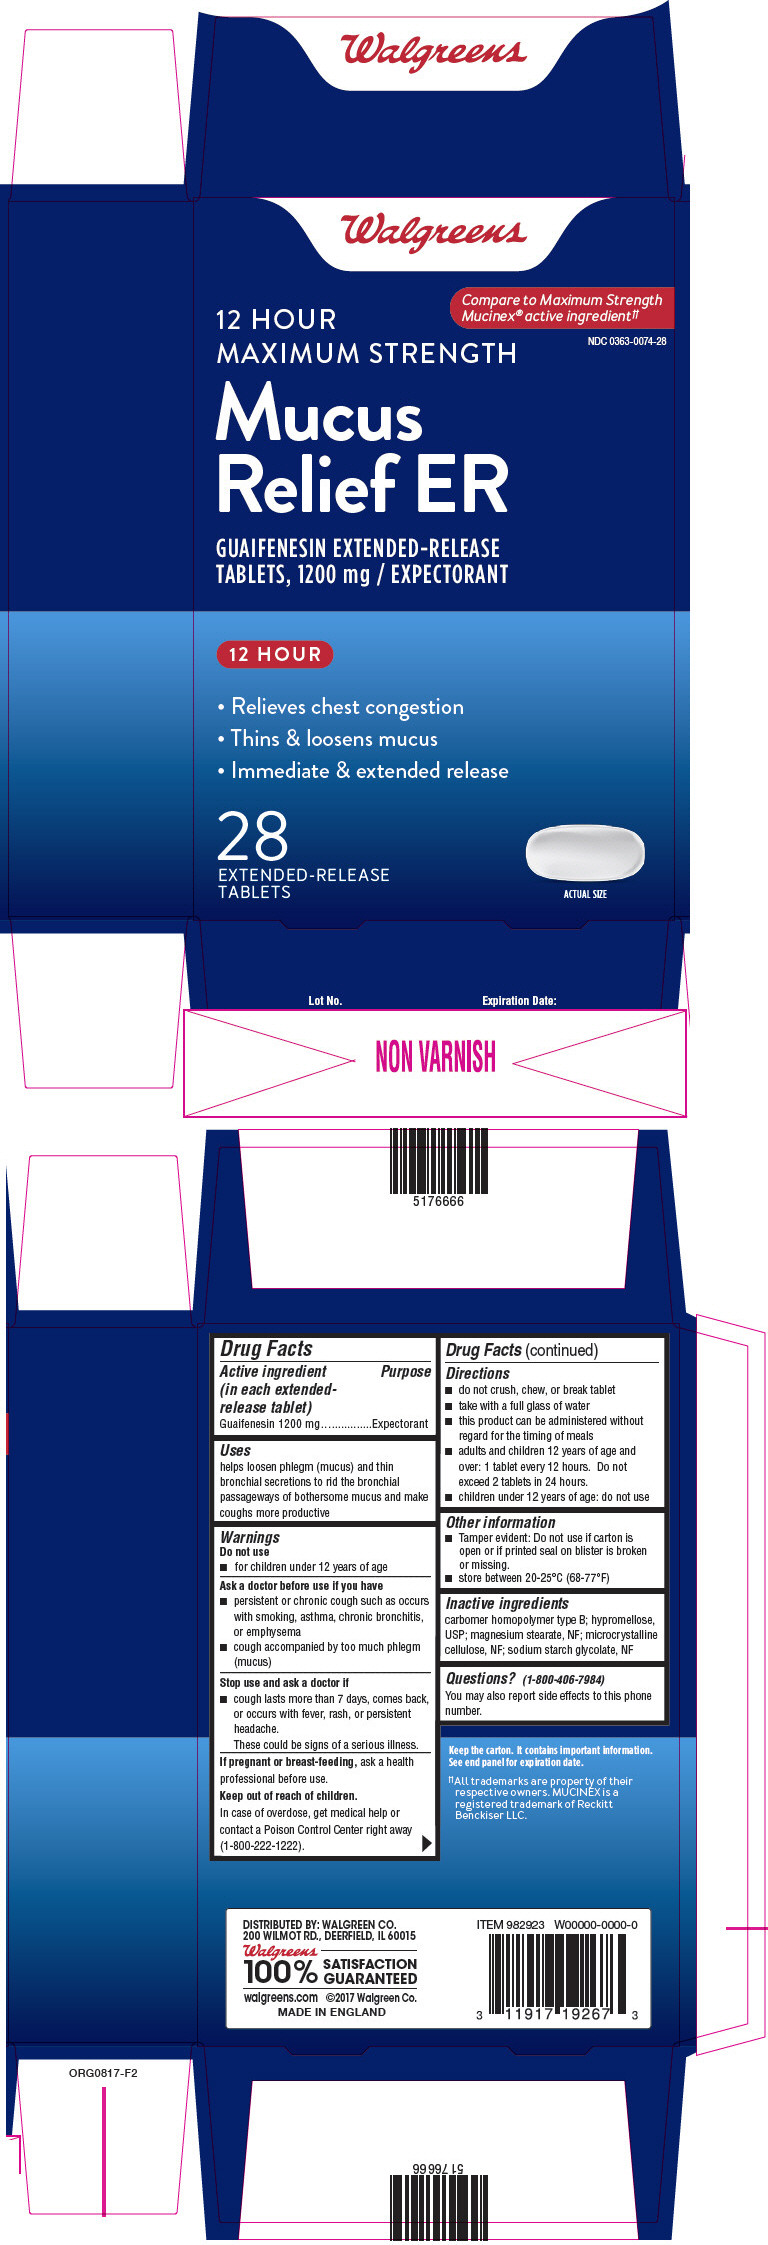 Principal Display Panel - 1200 mg Tablet Blister Pack Carton